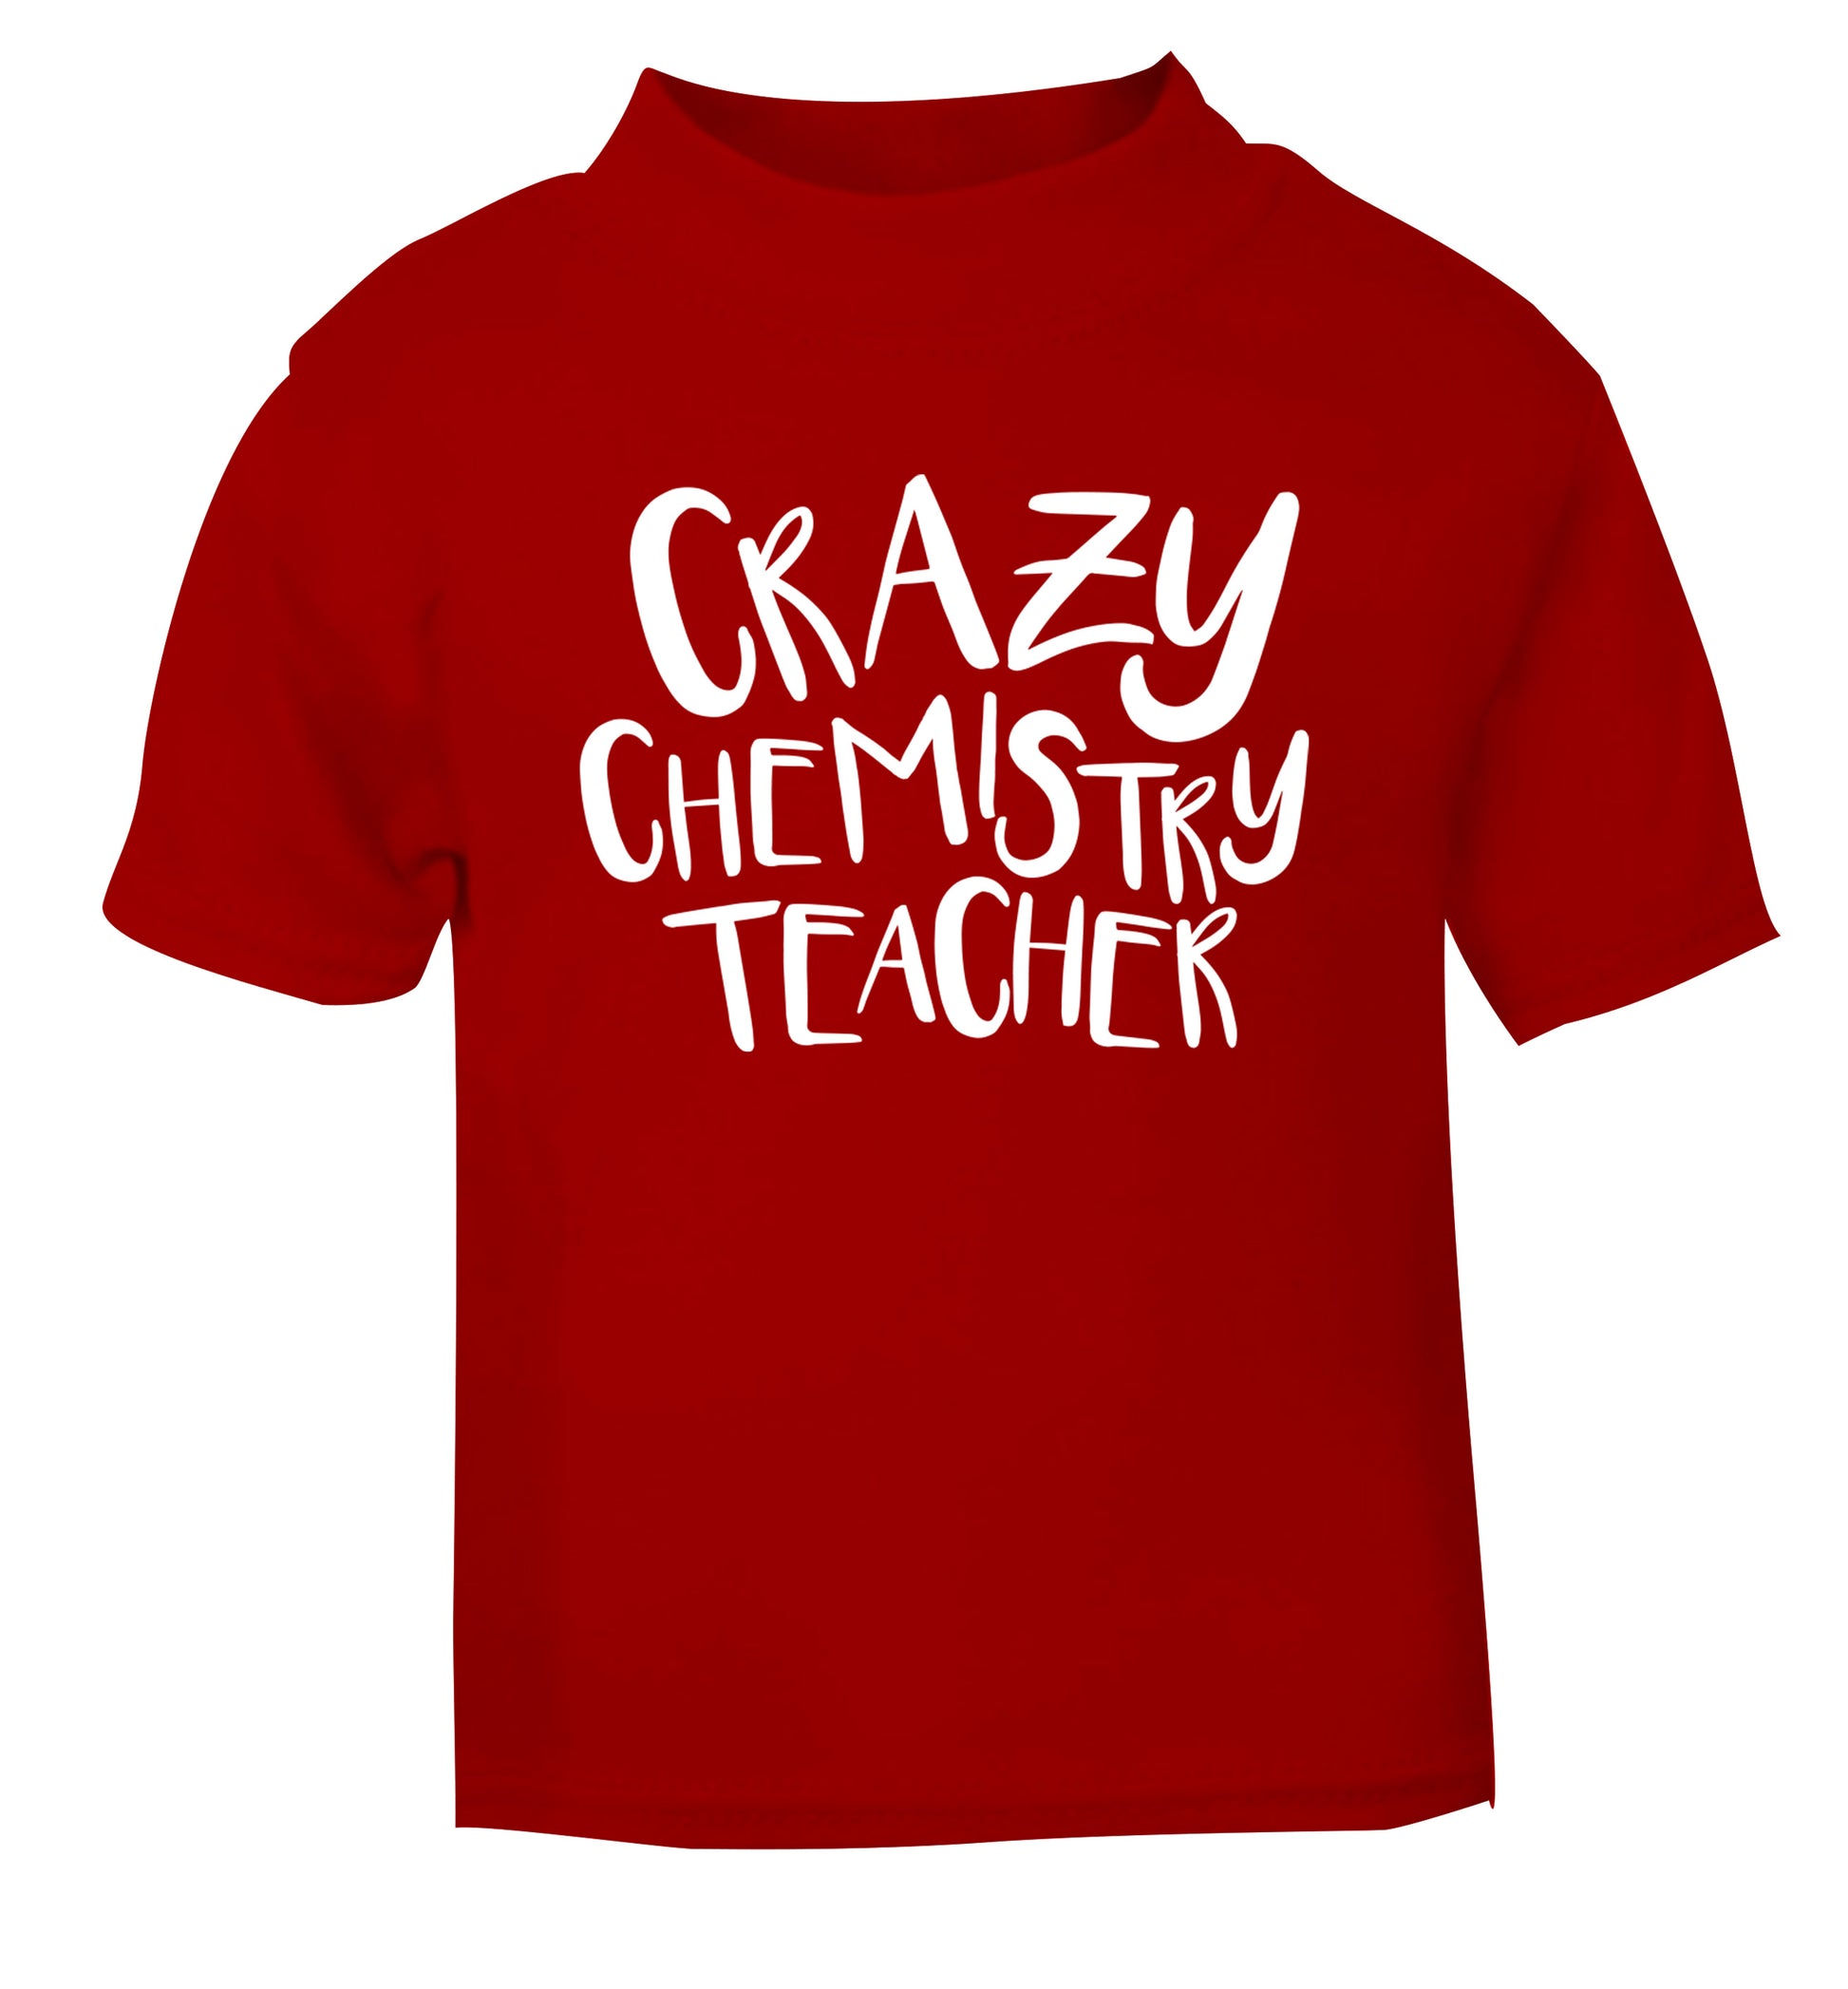 Crazy chemistry teacher red Baby Toddler Tshirt 2 Years